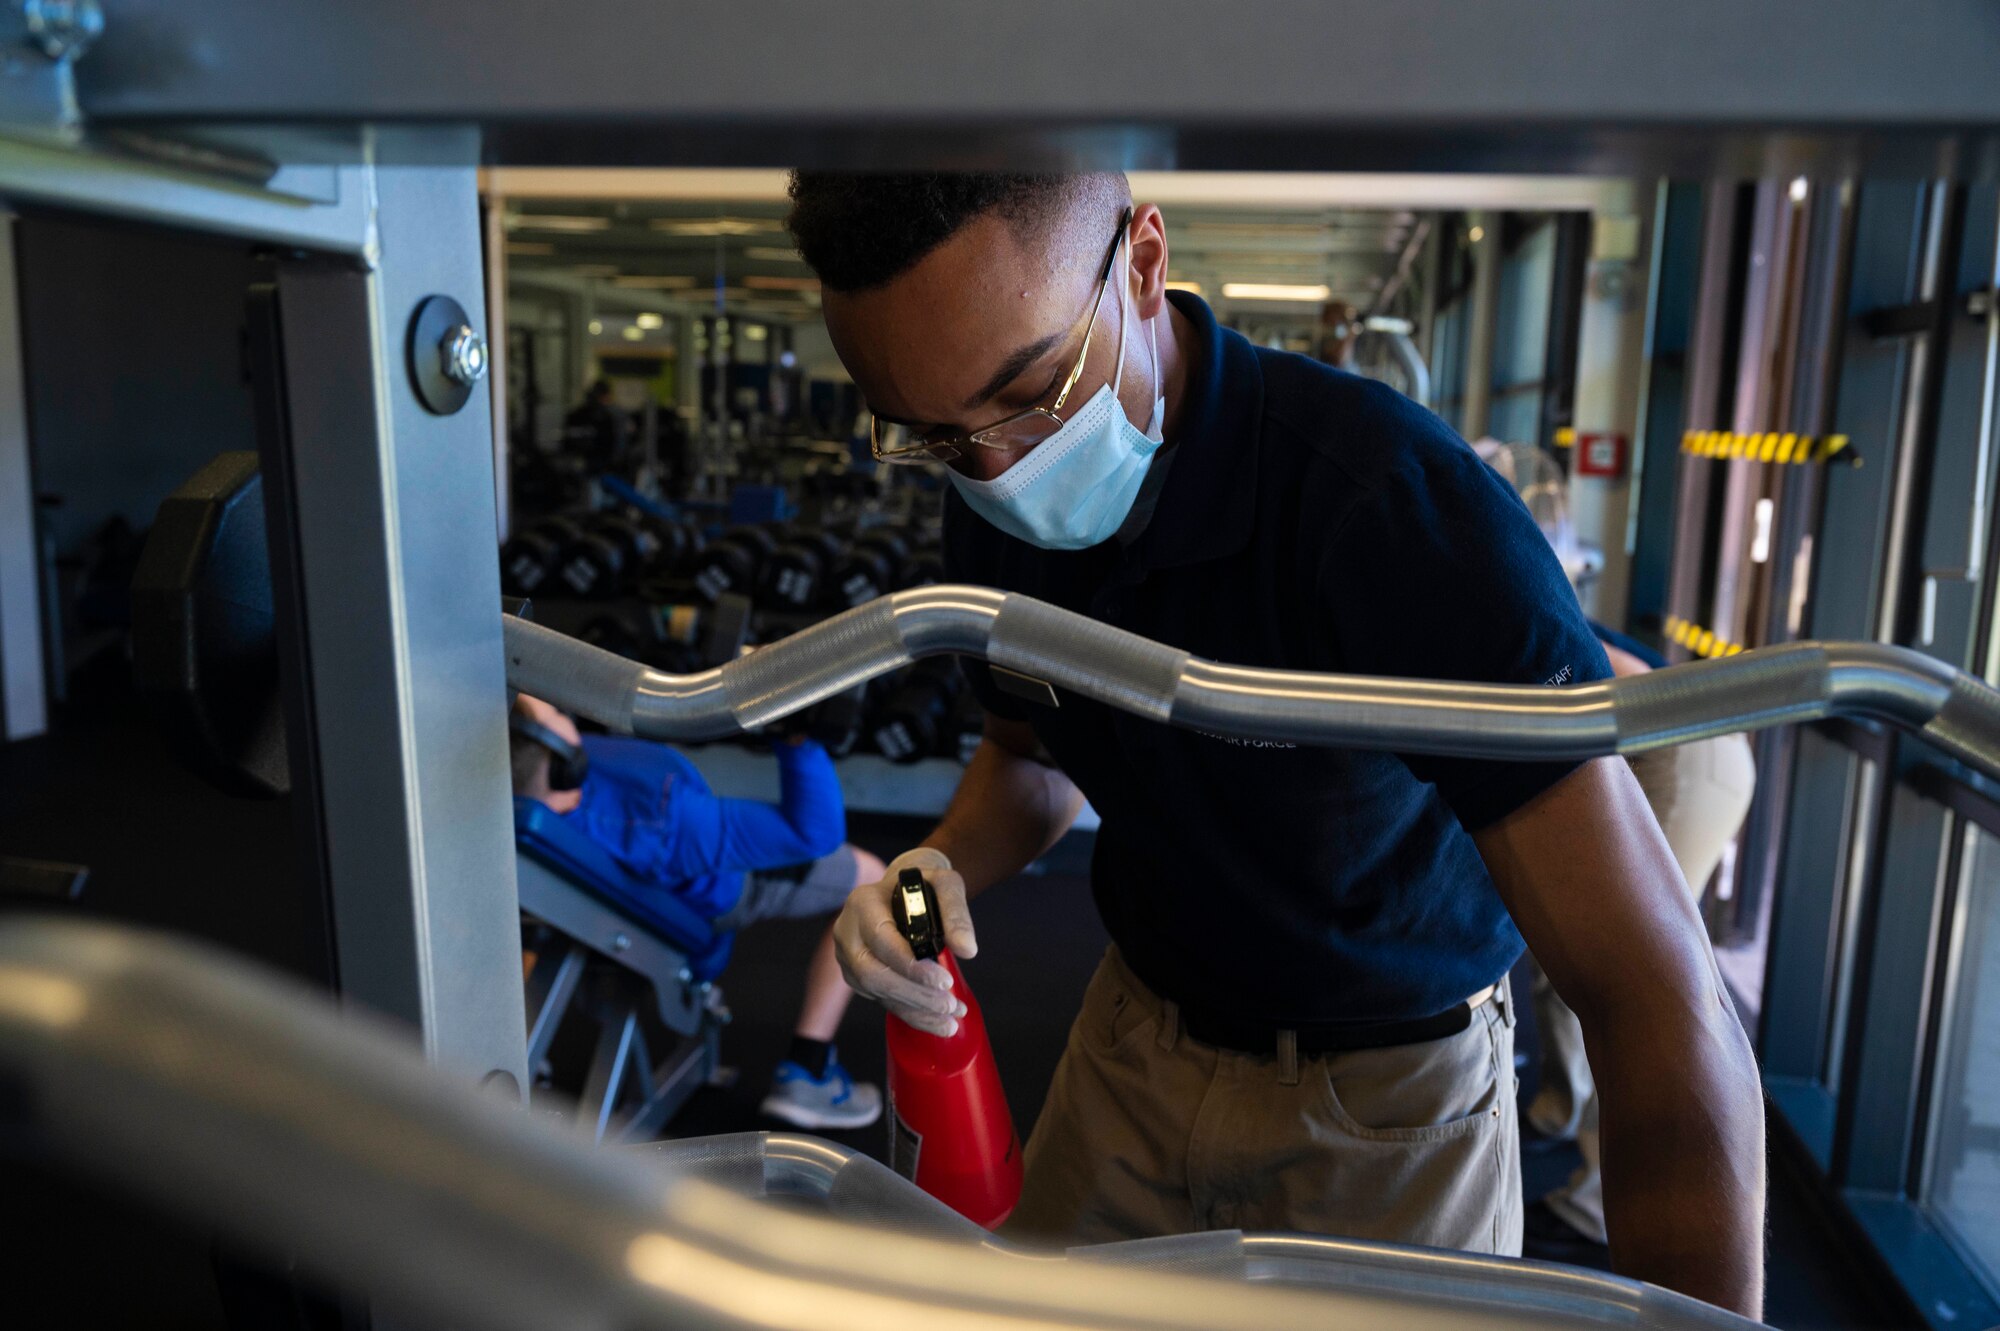 U.S. Air Force Airman Luke Winston, 786th Force Support Squadron fitness journeyman, sanitizes gym equipment